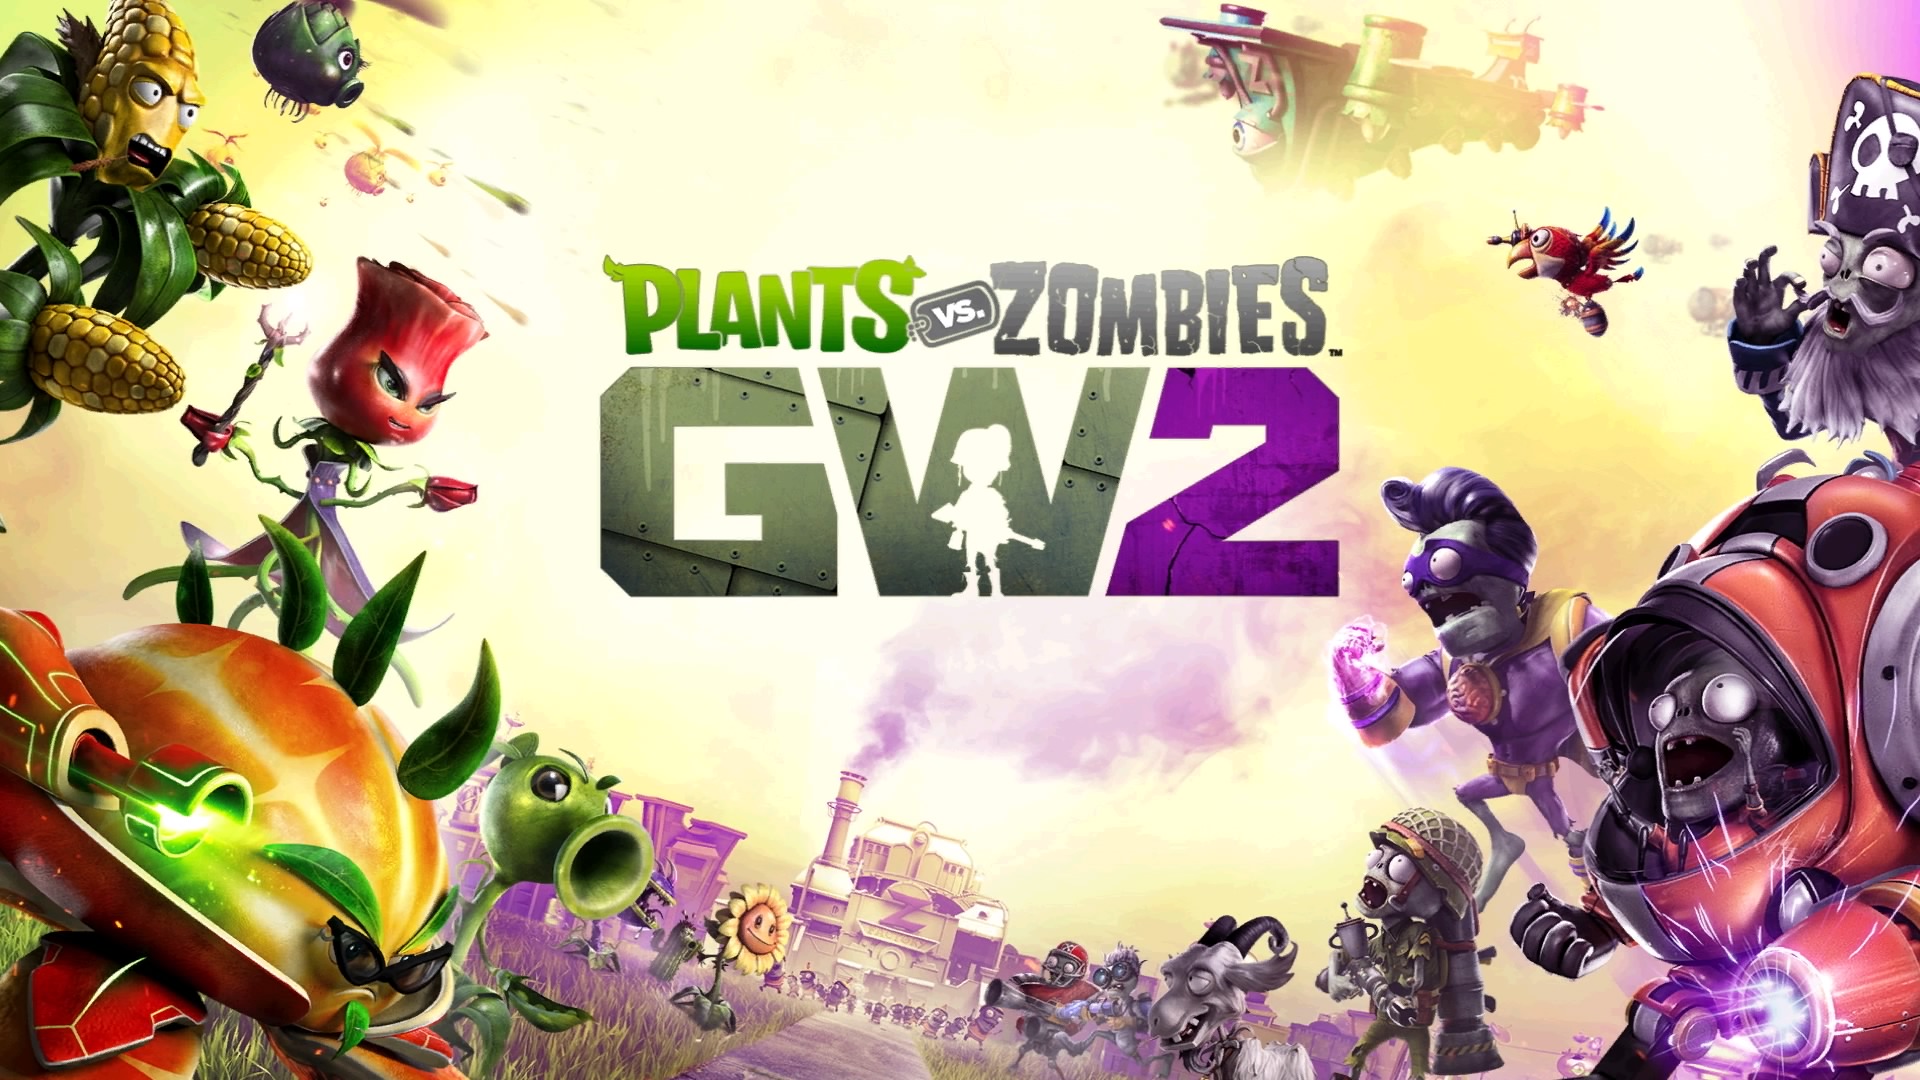 Play Plants vs. Zombies™ Garden Warfare 2